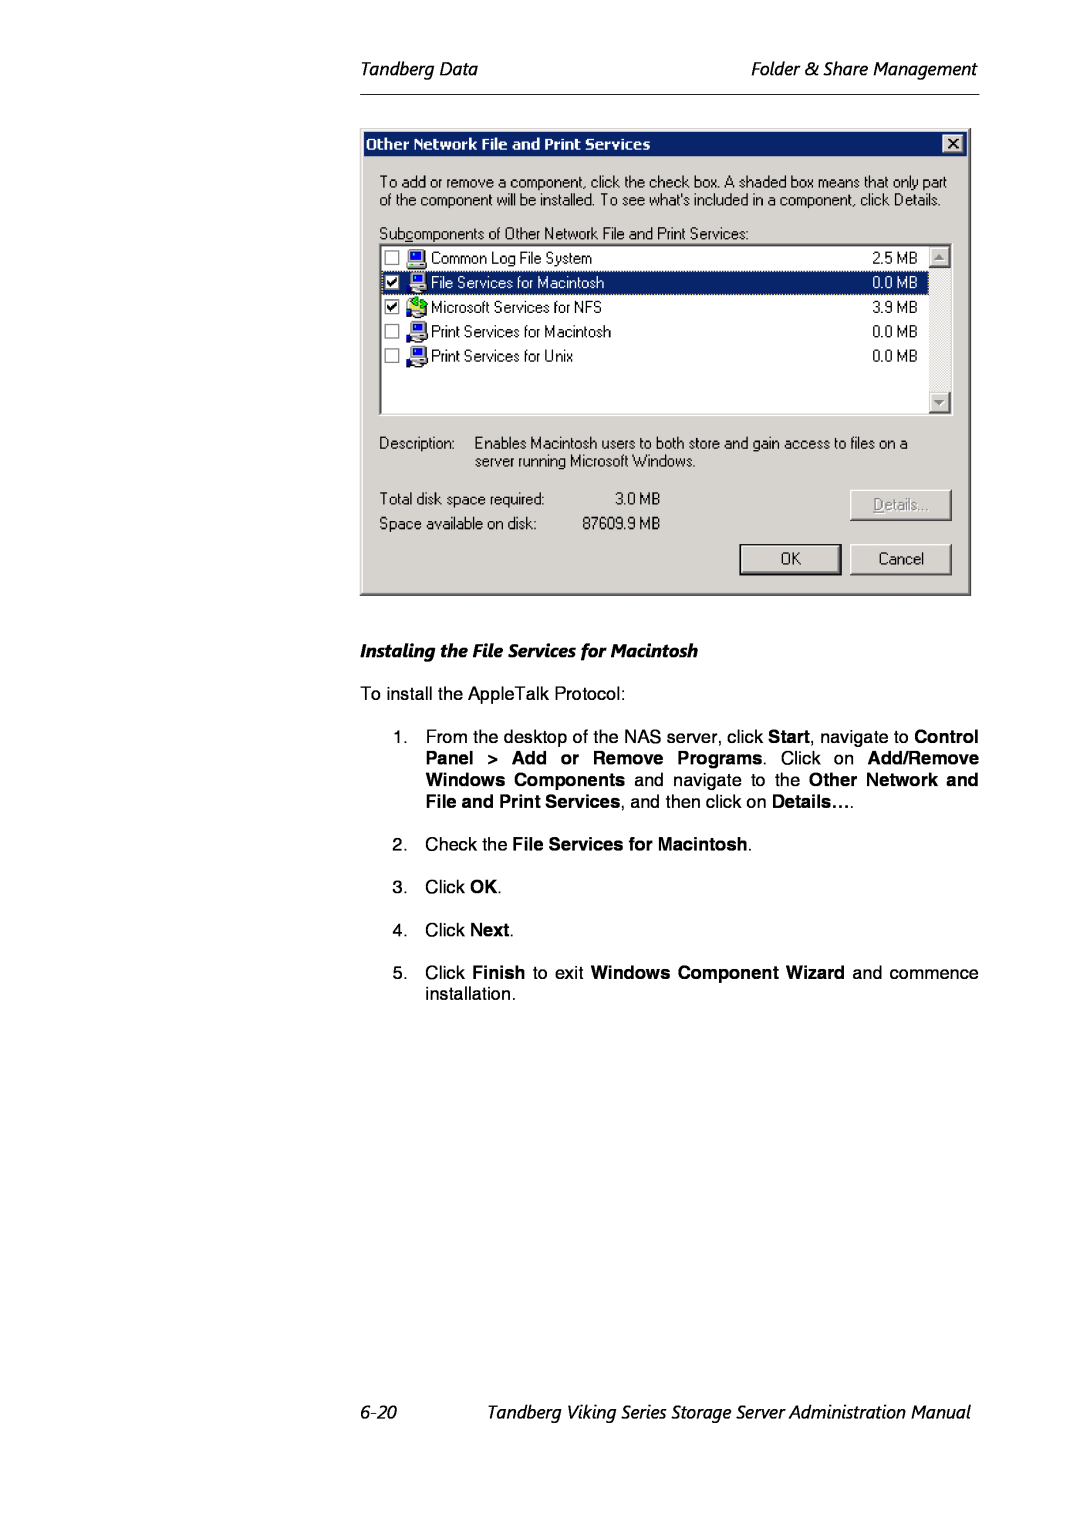 Tandberg Data Viking FS-1600 manual Instaling the File Services for Macintosh, 6-20, Tandberg DataFolder & Share Management 